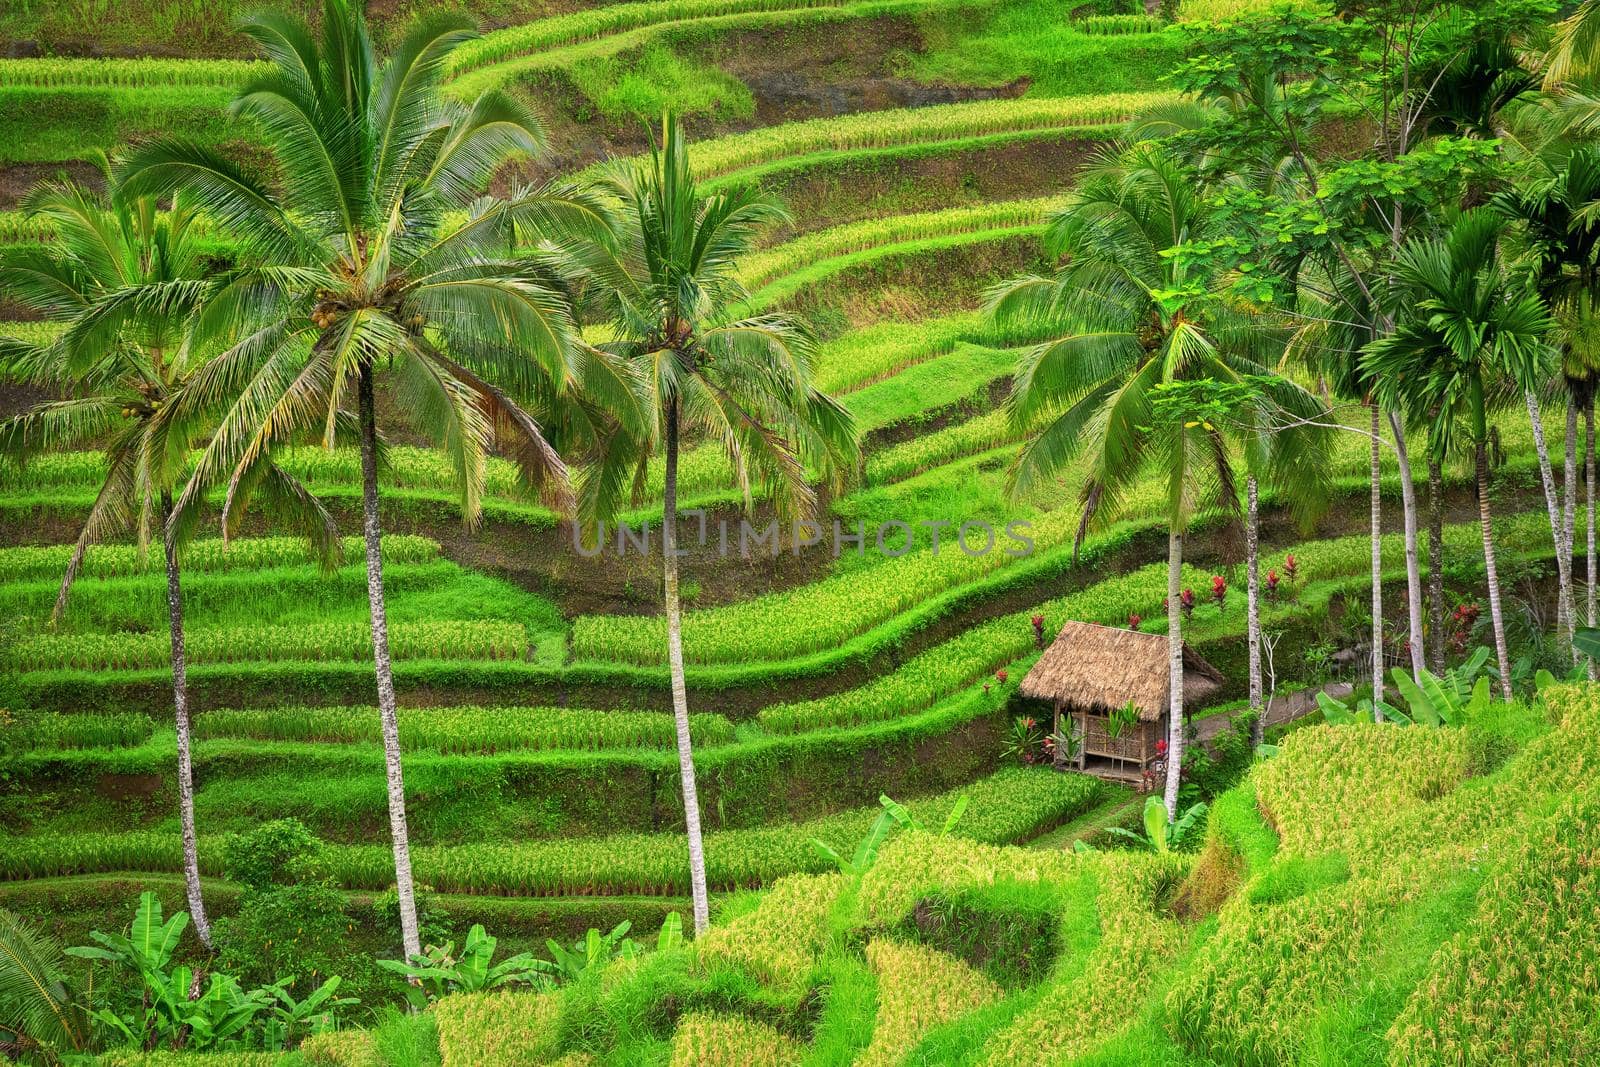 Green rice terraces Tegalalang close to Ubud, Bali, Indonesia